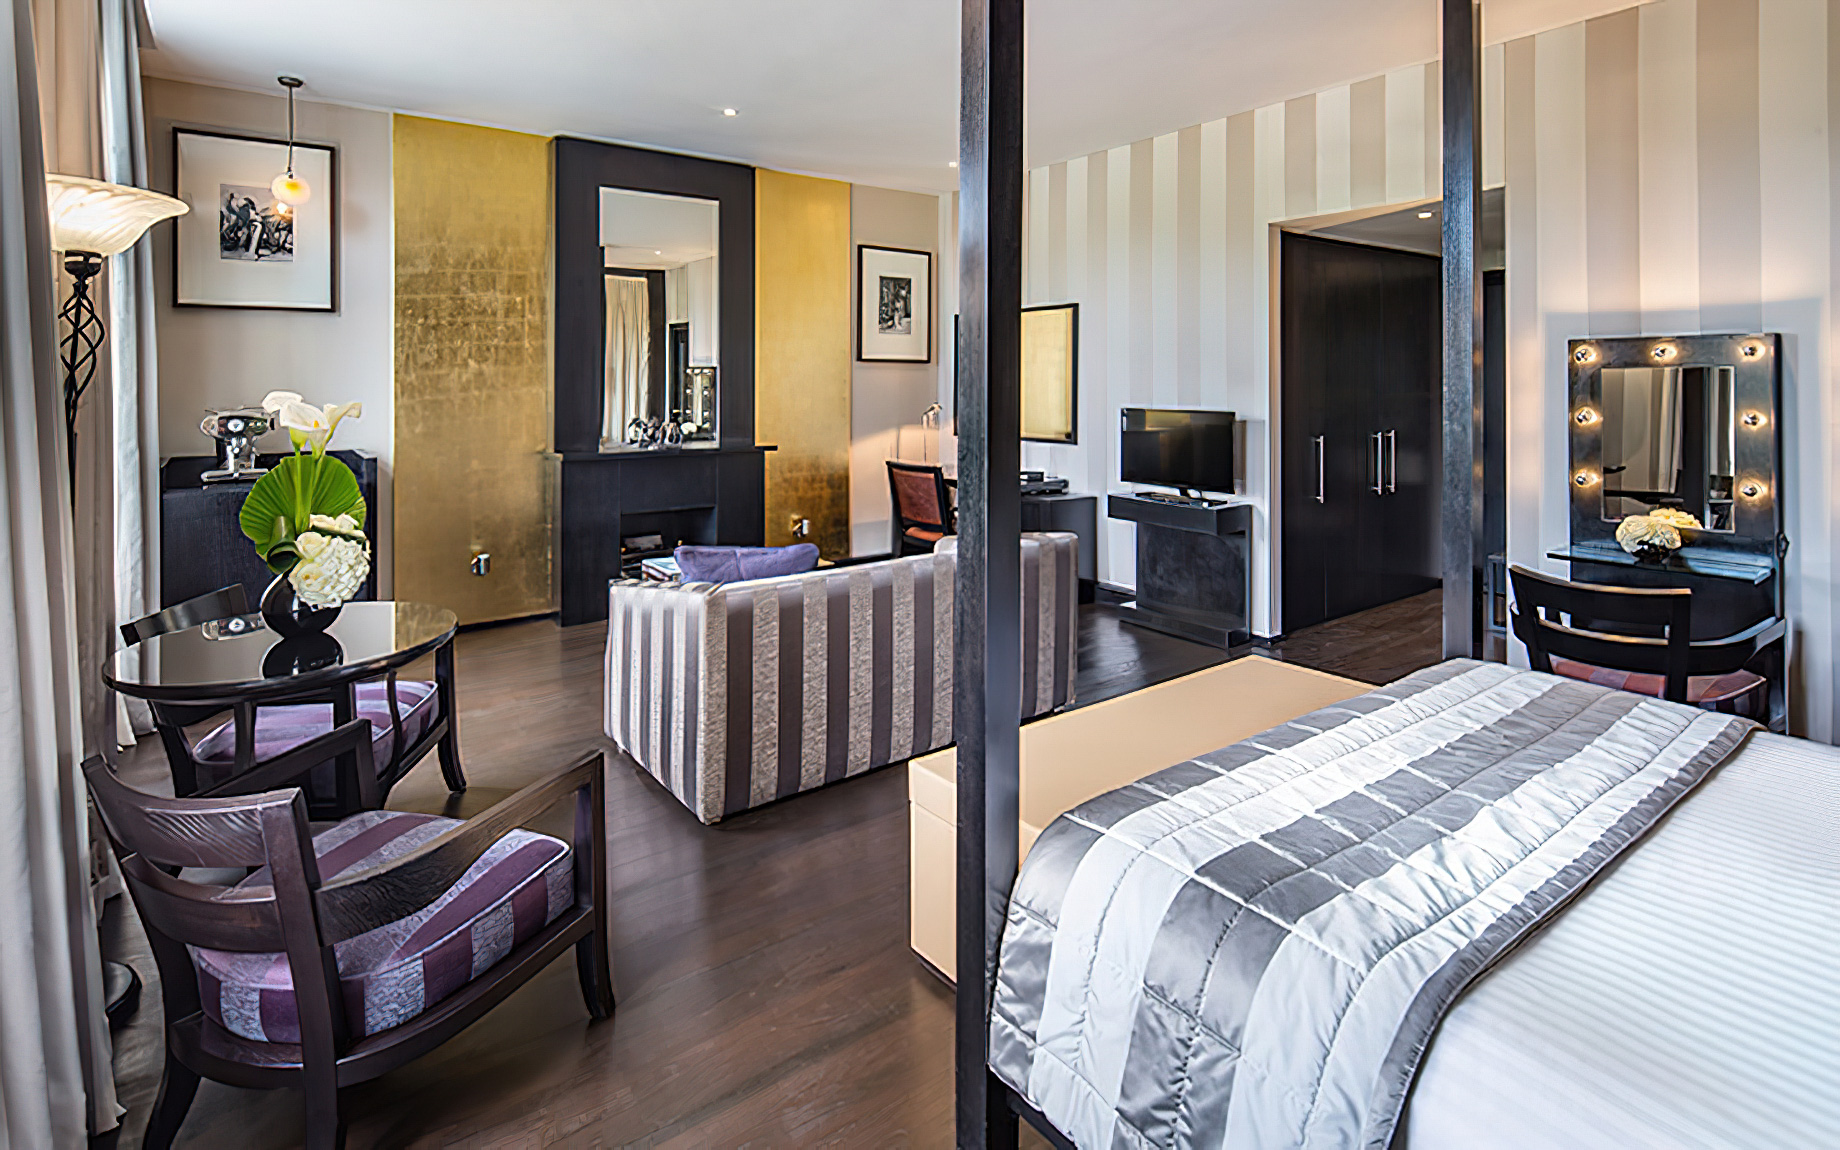 Baglioni Hotel London – South Kensington, London, United Kingdom – Executive Junior Suite